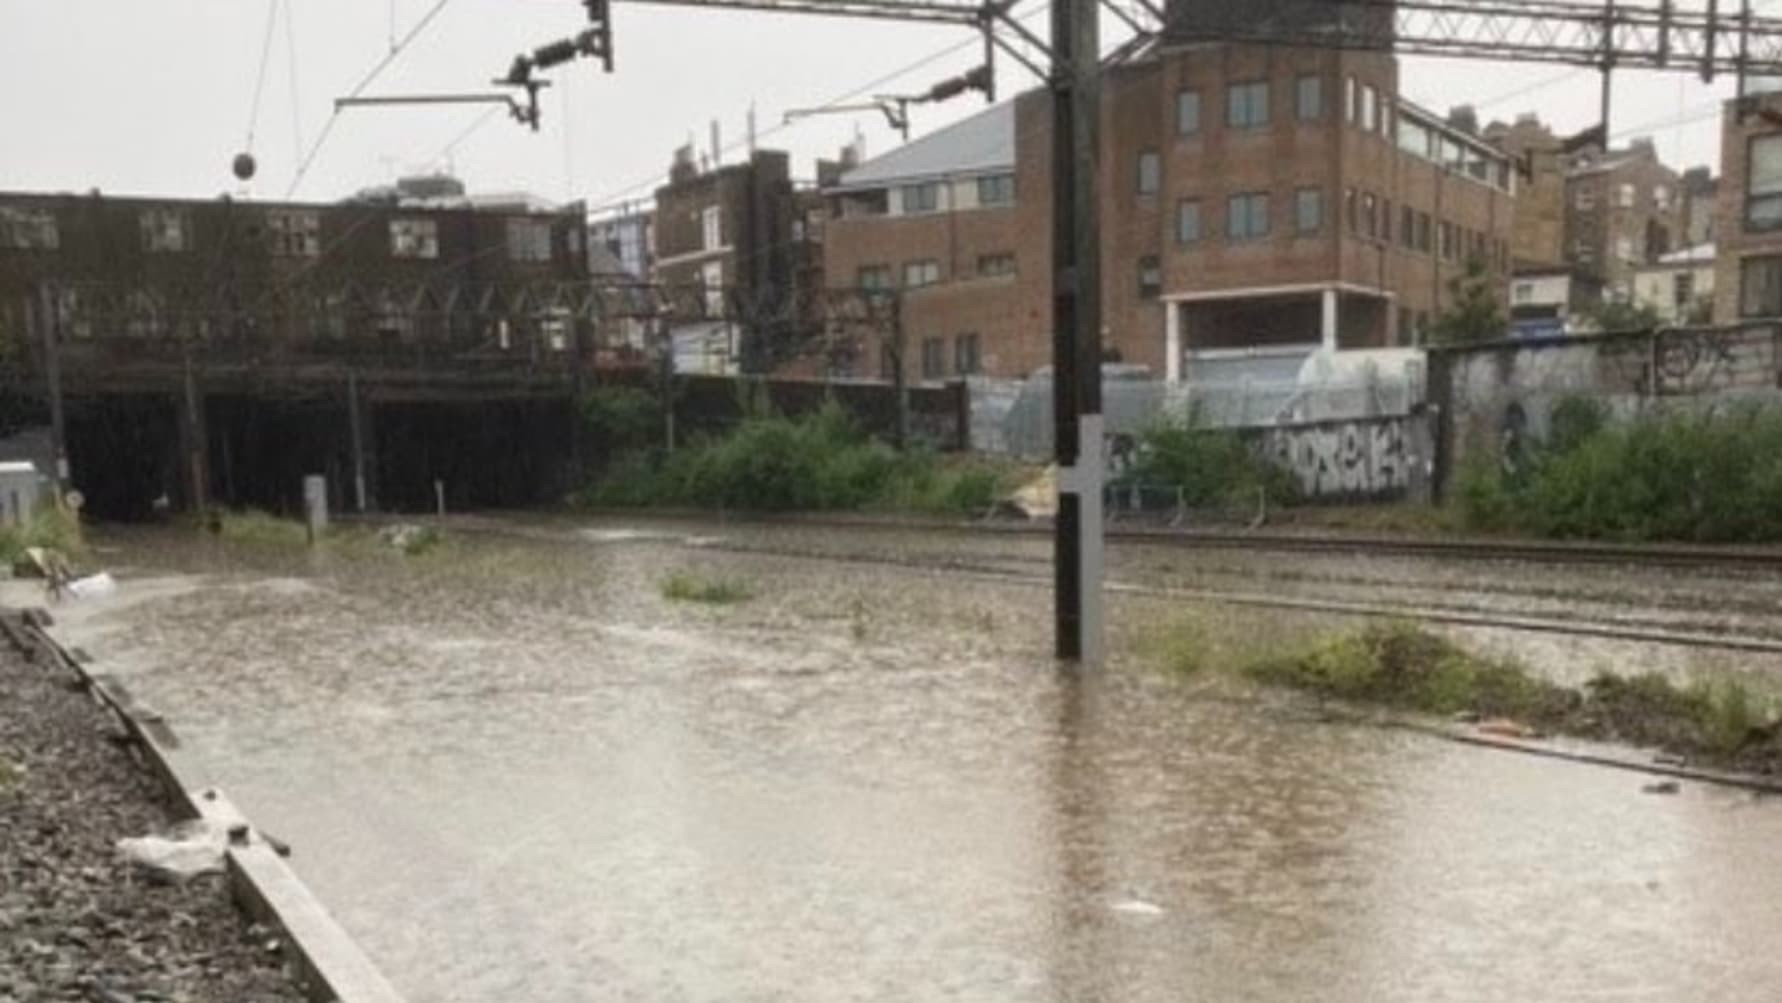 West Coast main line flood repairs to impact London Euston trains